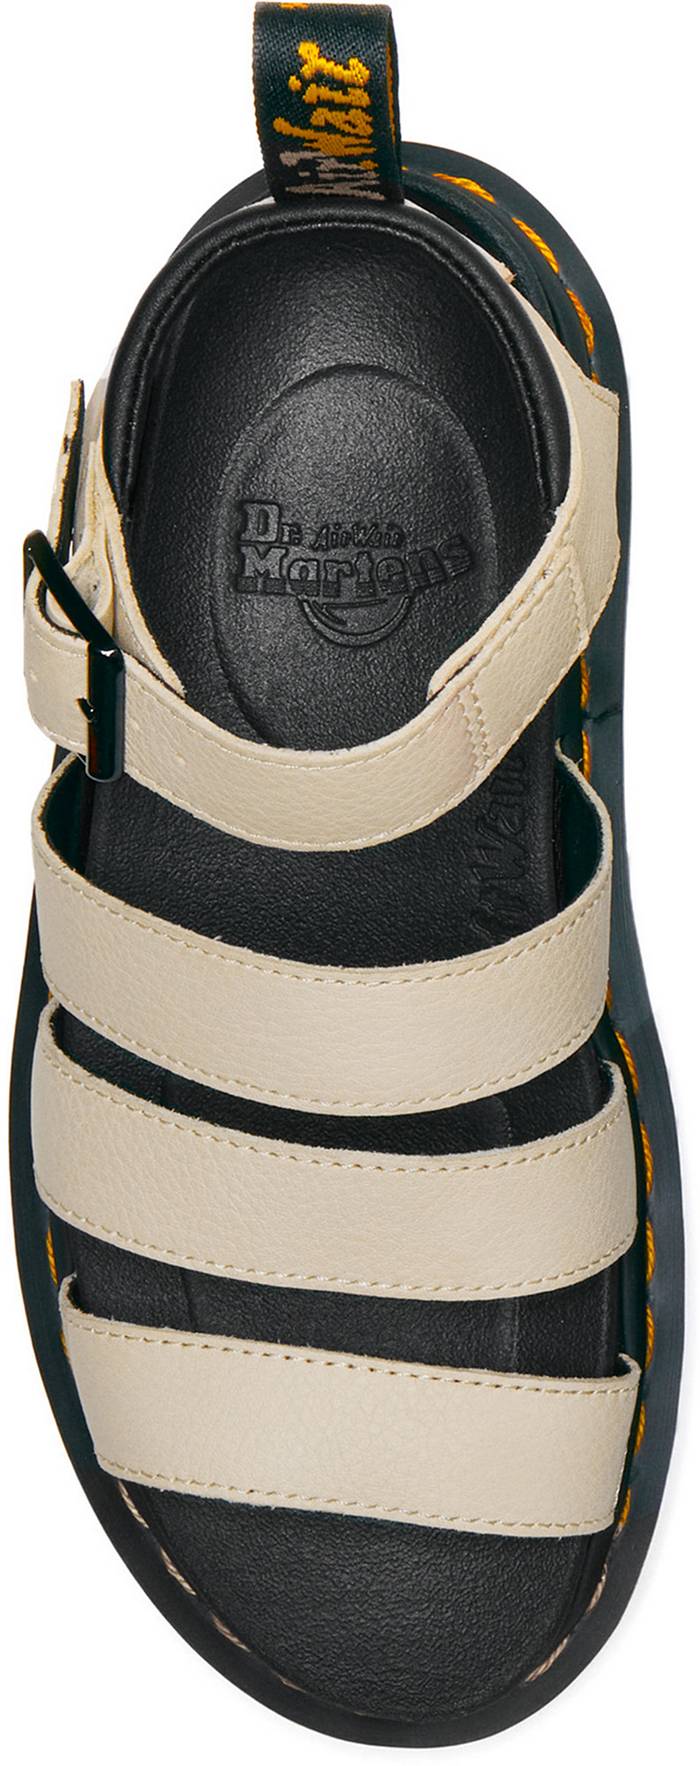 Blaire Women's Pisa Leather Strap Sandals in Peach Beige